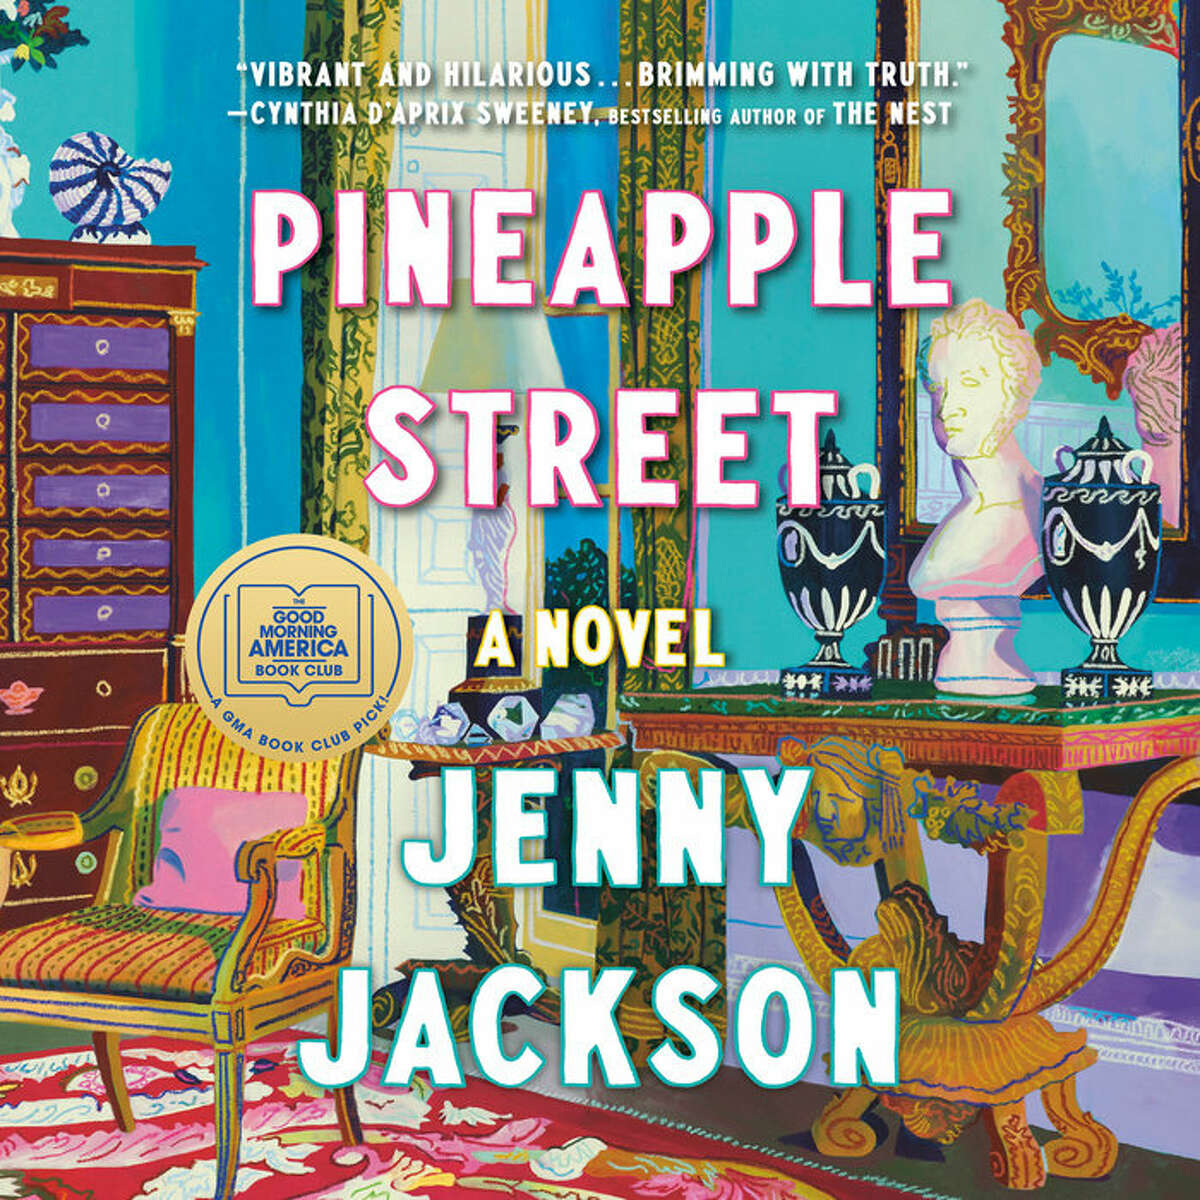 "Pineapple Street" by Jenny Jackson